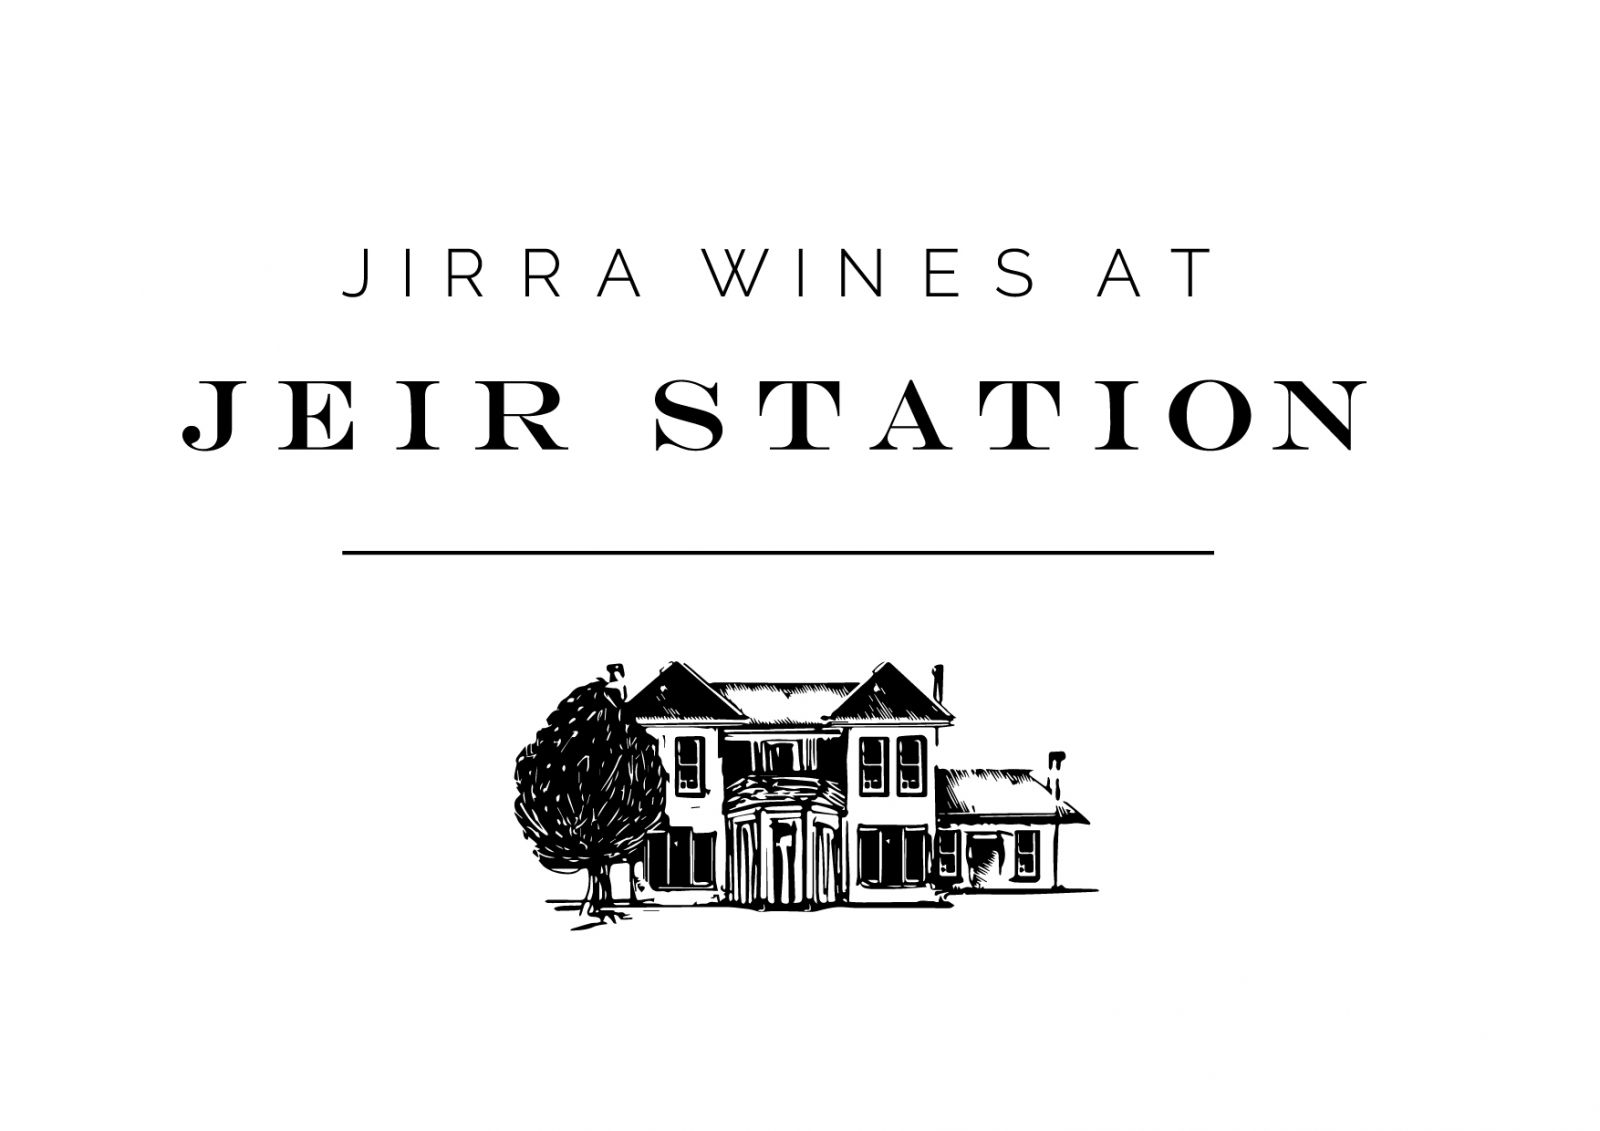 Jirra wines logo